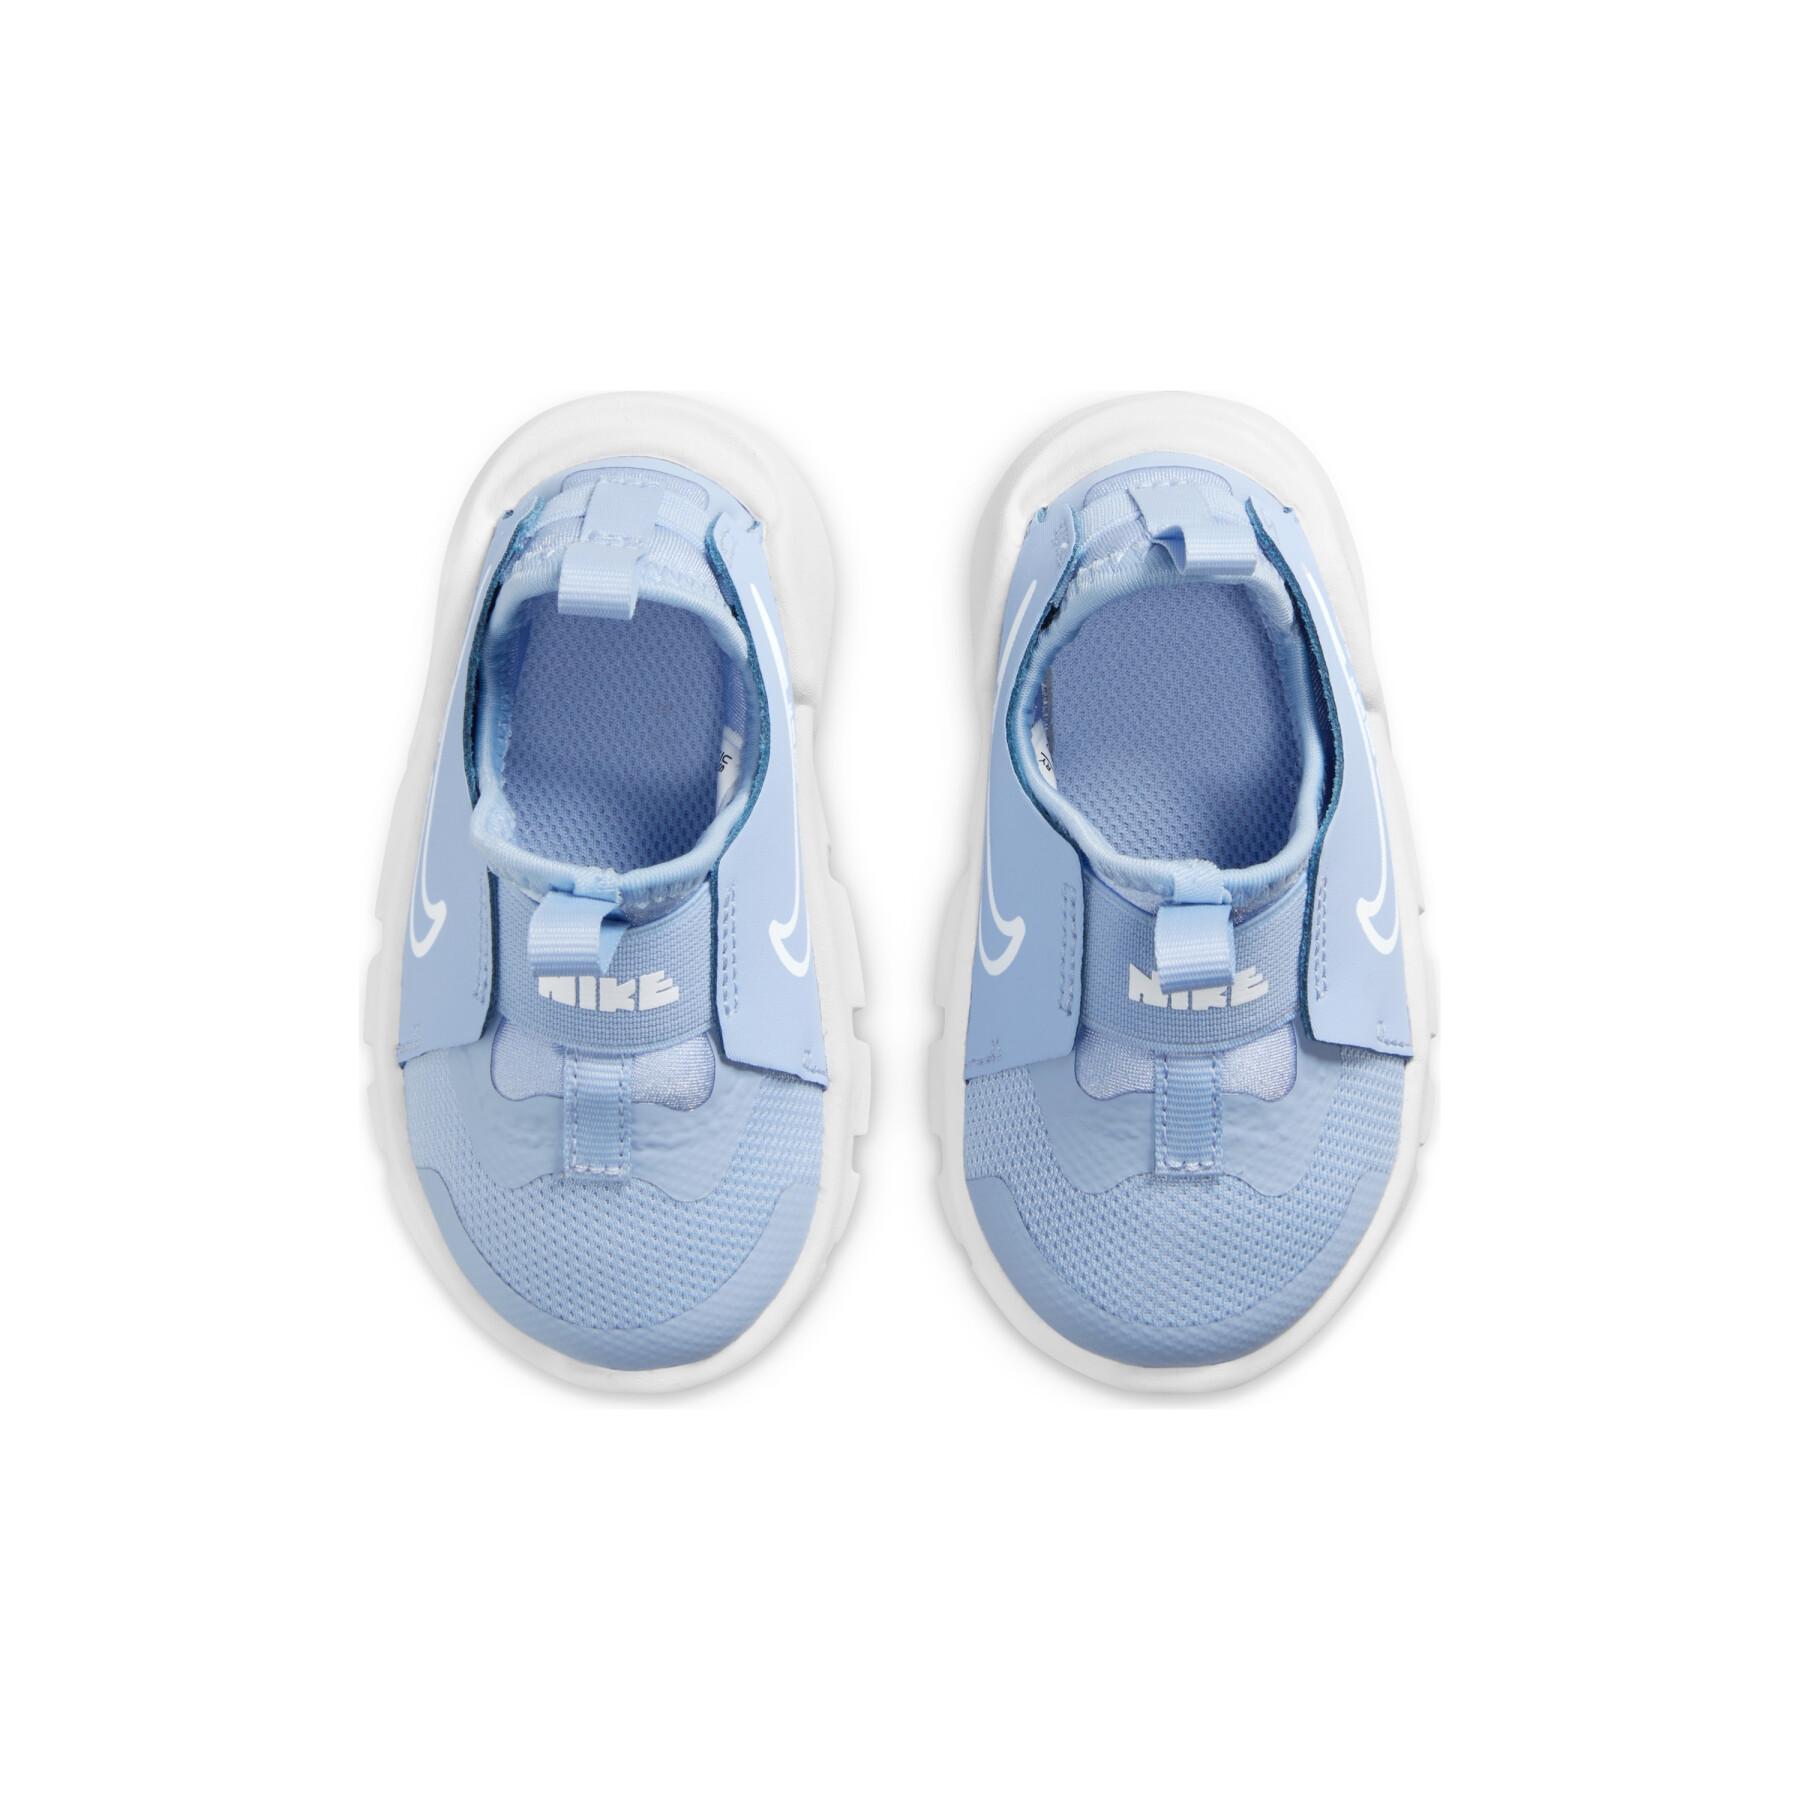 Sneakers für Babies Nike Flex Runner 2